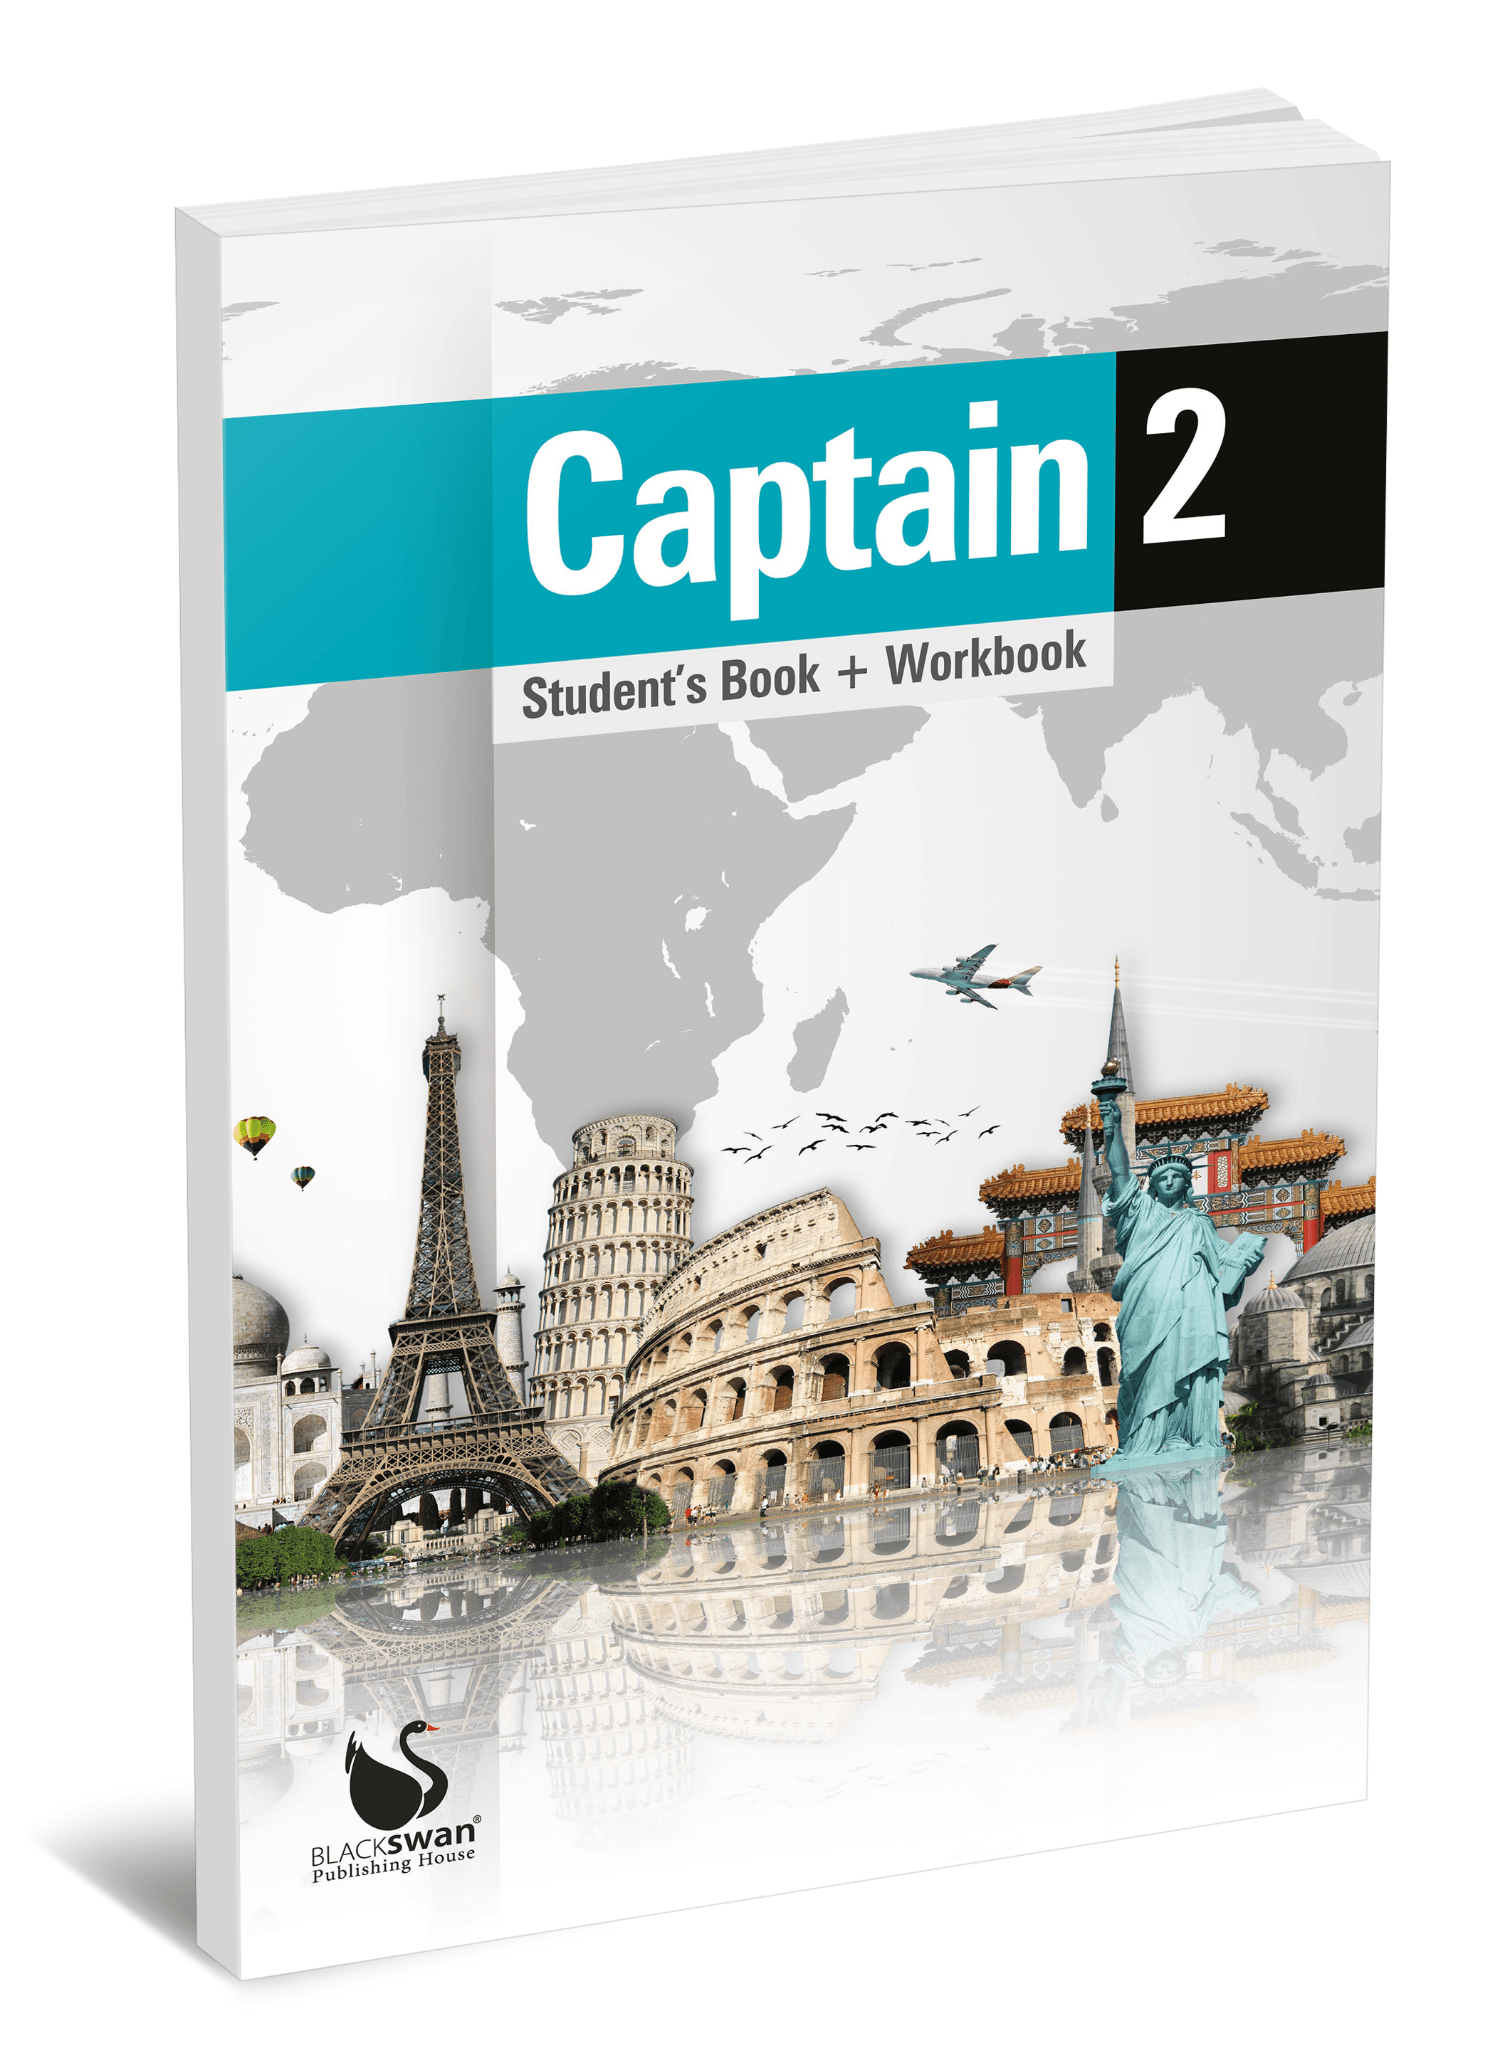 Captain 2 Student’s Book + Workbook